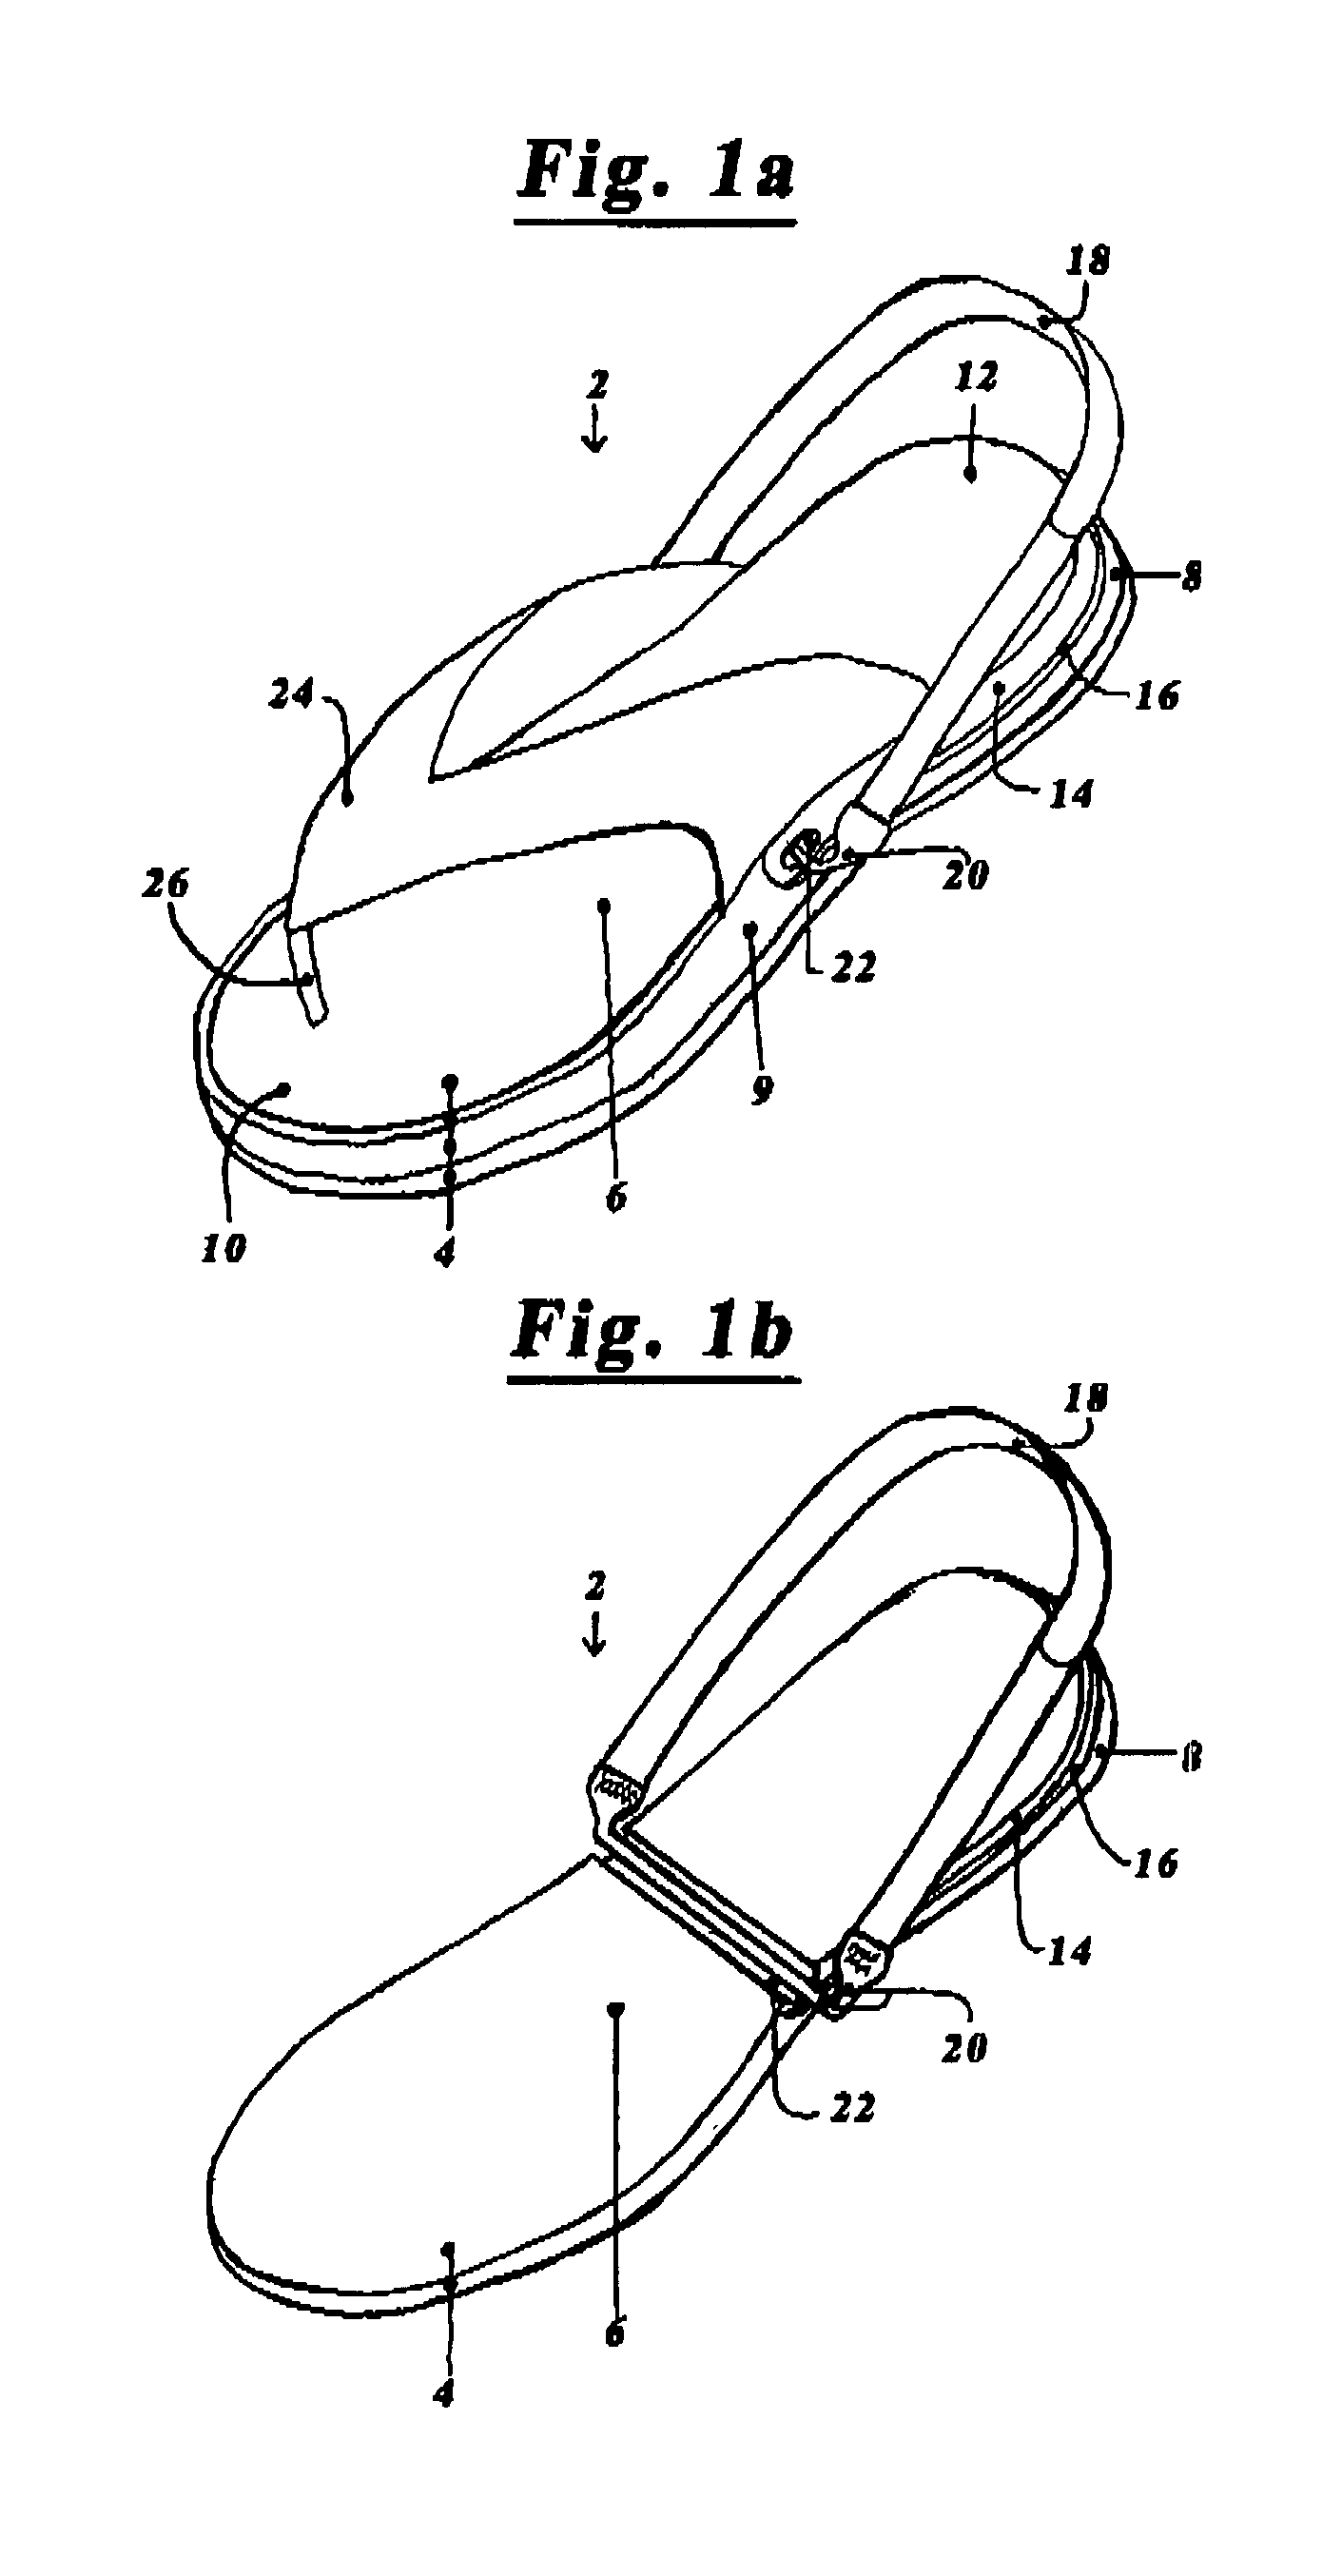 Interchangeable flip-flop/sandal